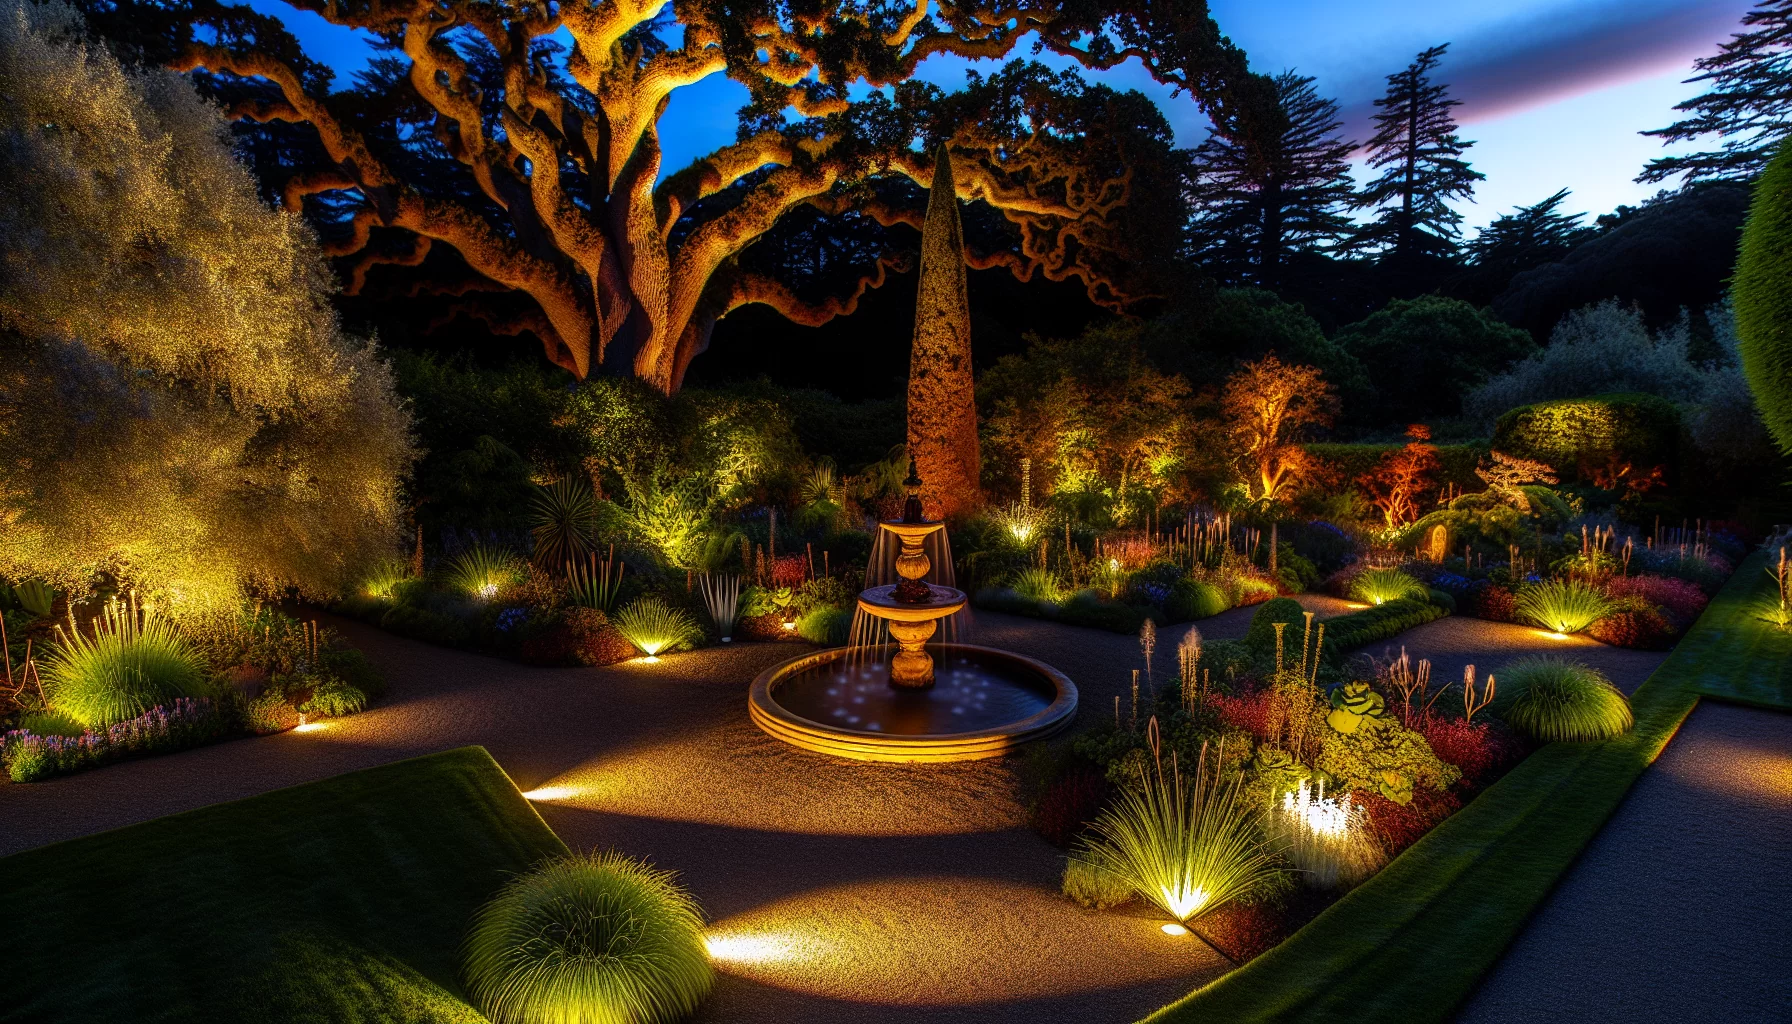 Landscape lighting in a garden